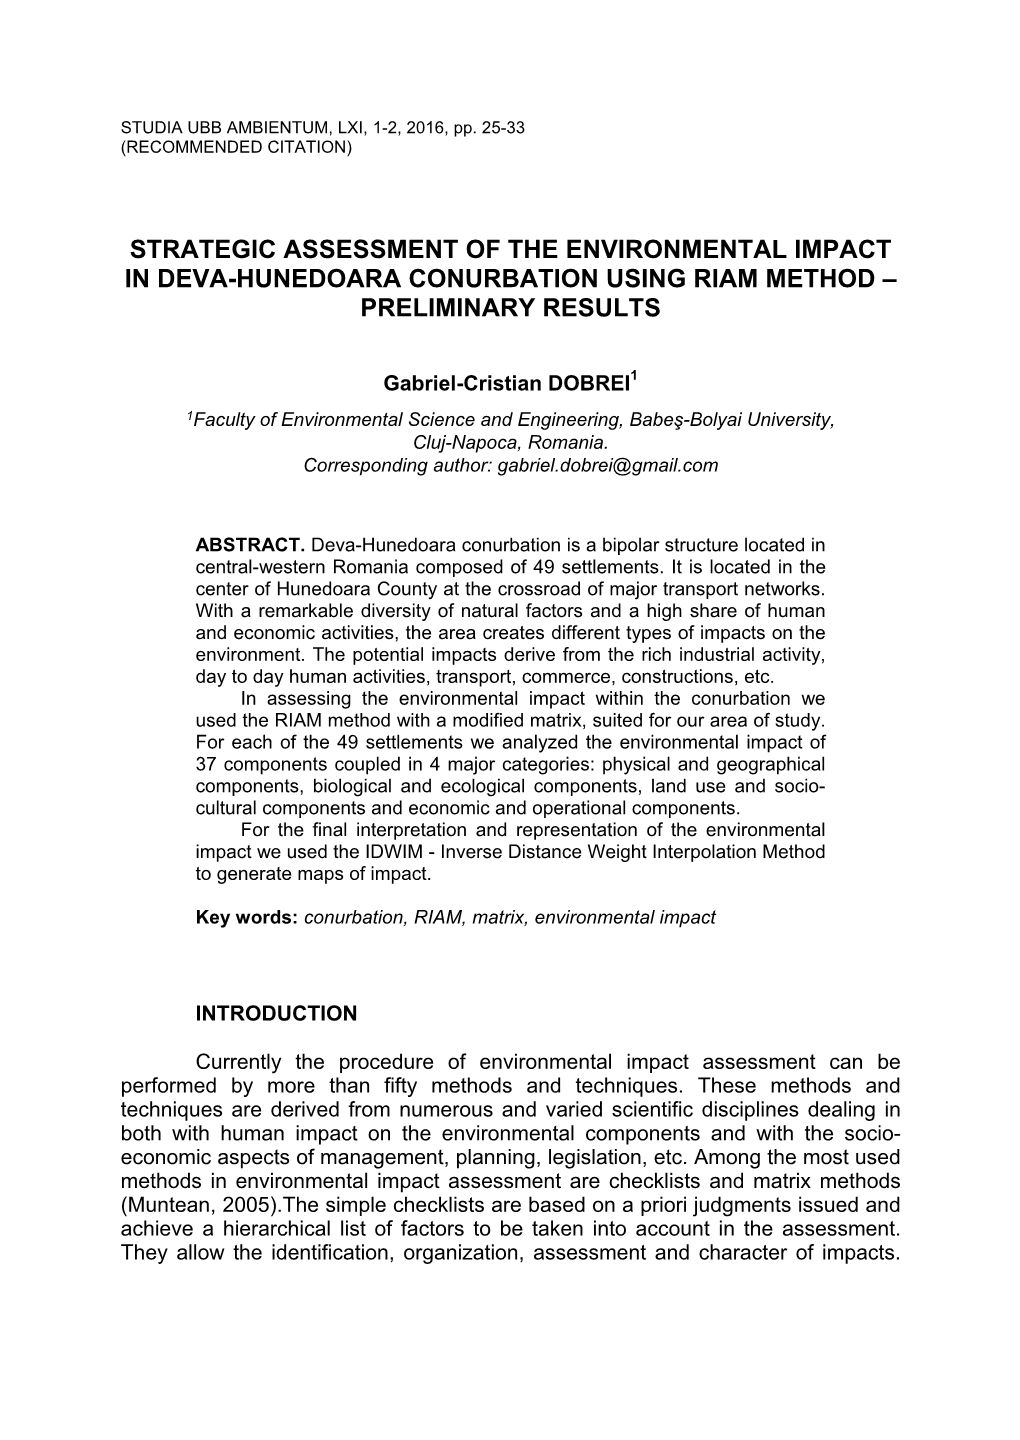 Strategic Assessment of the Environmental Impact in Deva-Hunedoara Conurbation Using Riam Method – Preliminary Results